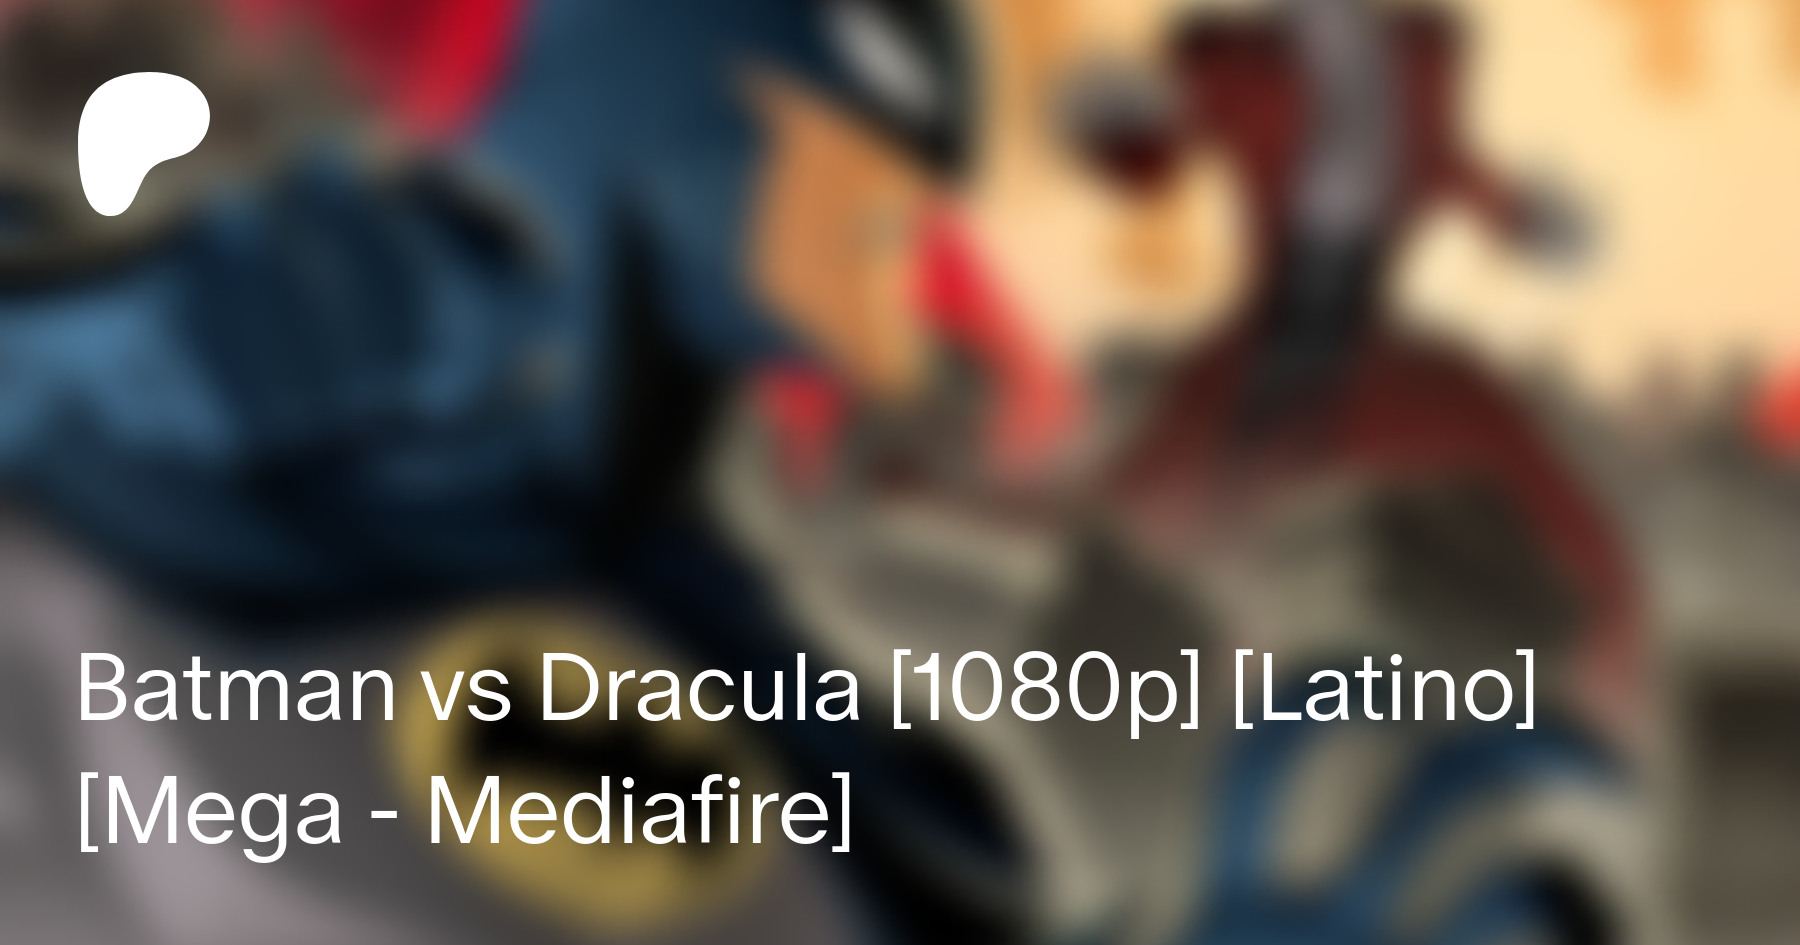 Batman vs Dracula [1080p] [Latino] [Mega - Mediafire] | Patreon